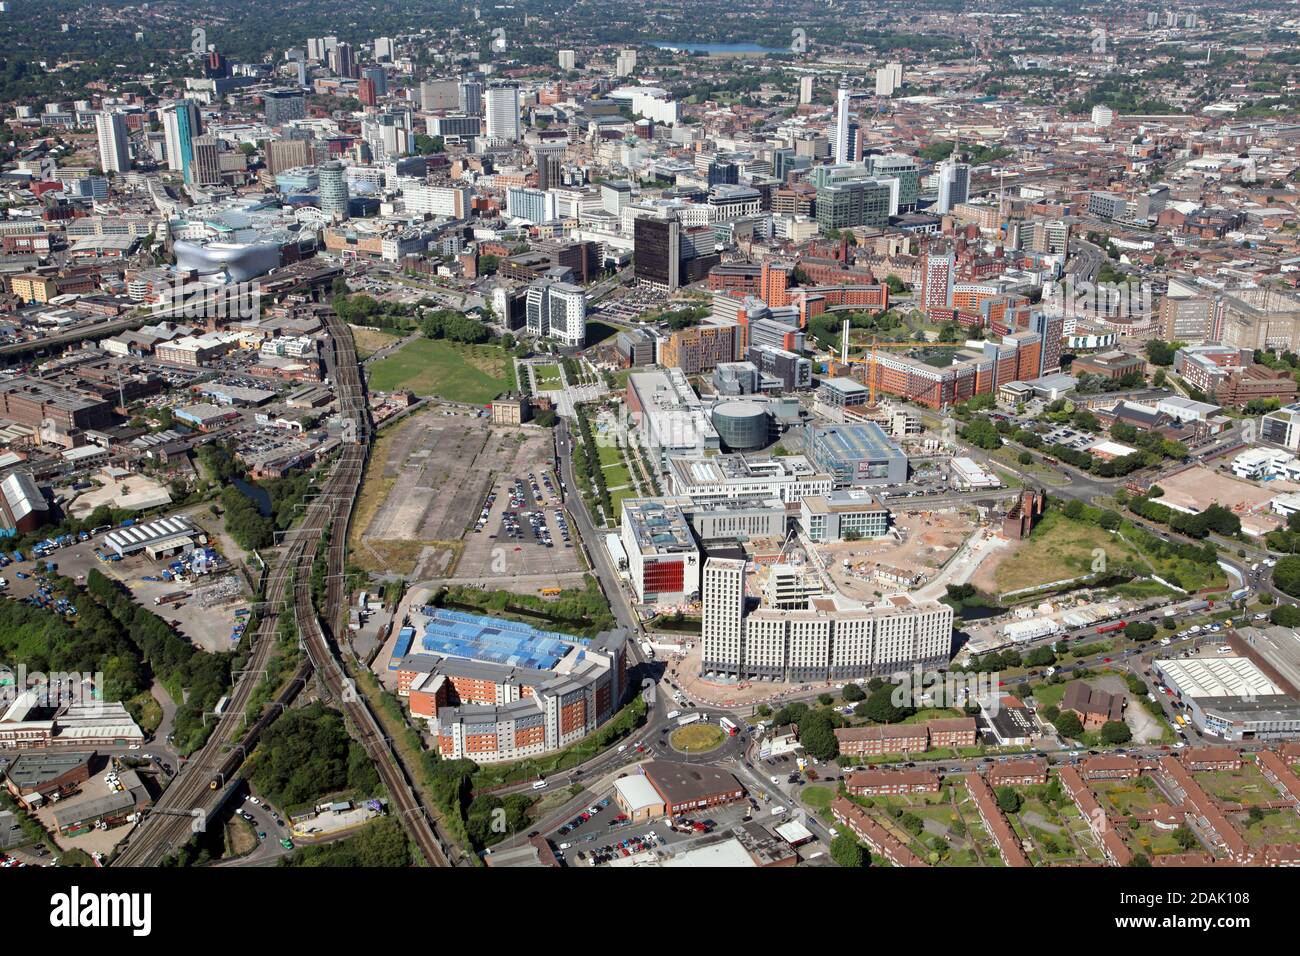 aerial view looking west down Curzon Street towards Birmingham city centre with Birmingham City University & Millennium Point prominent Stock Photo